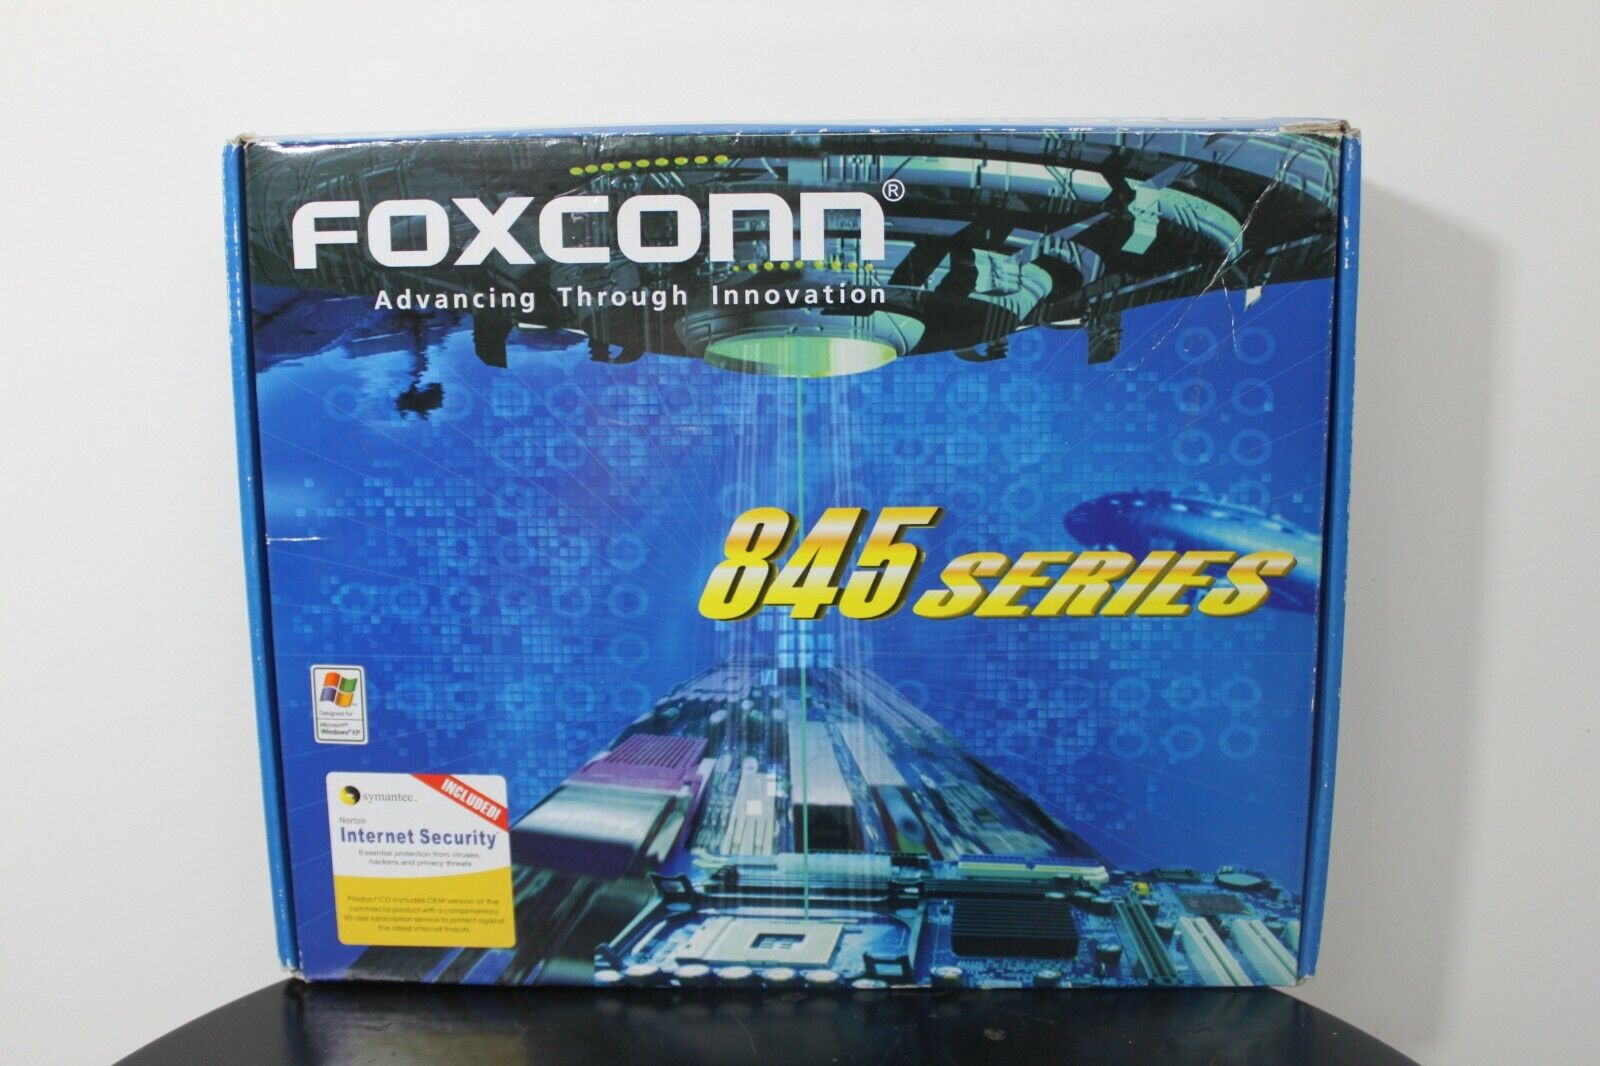 FOXCONN 845GV4MR Motherboard 3X PCI USB 2.0